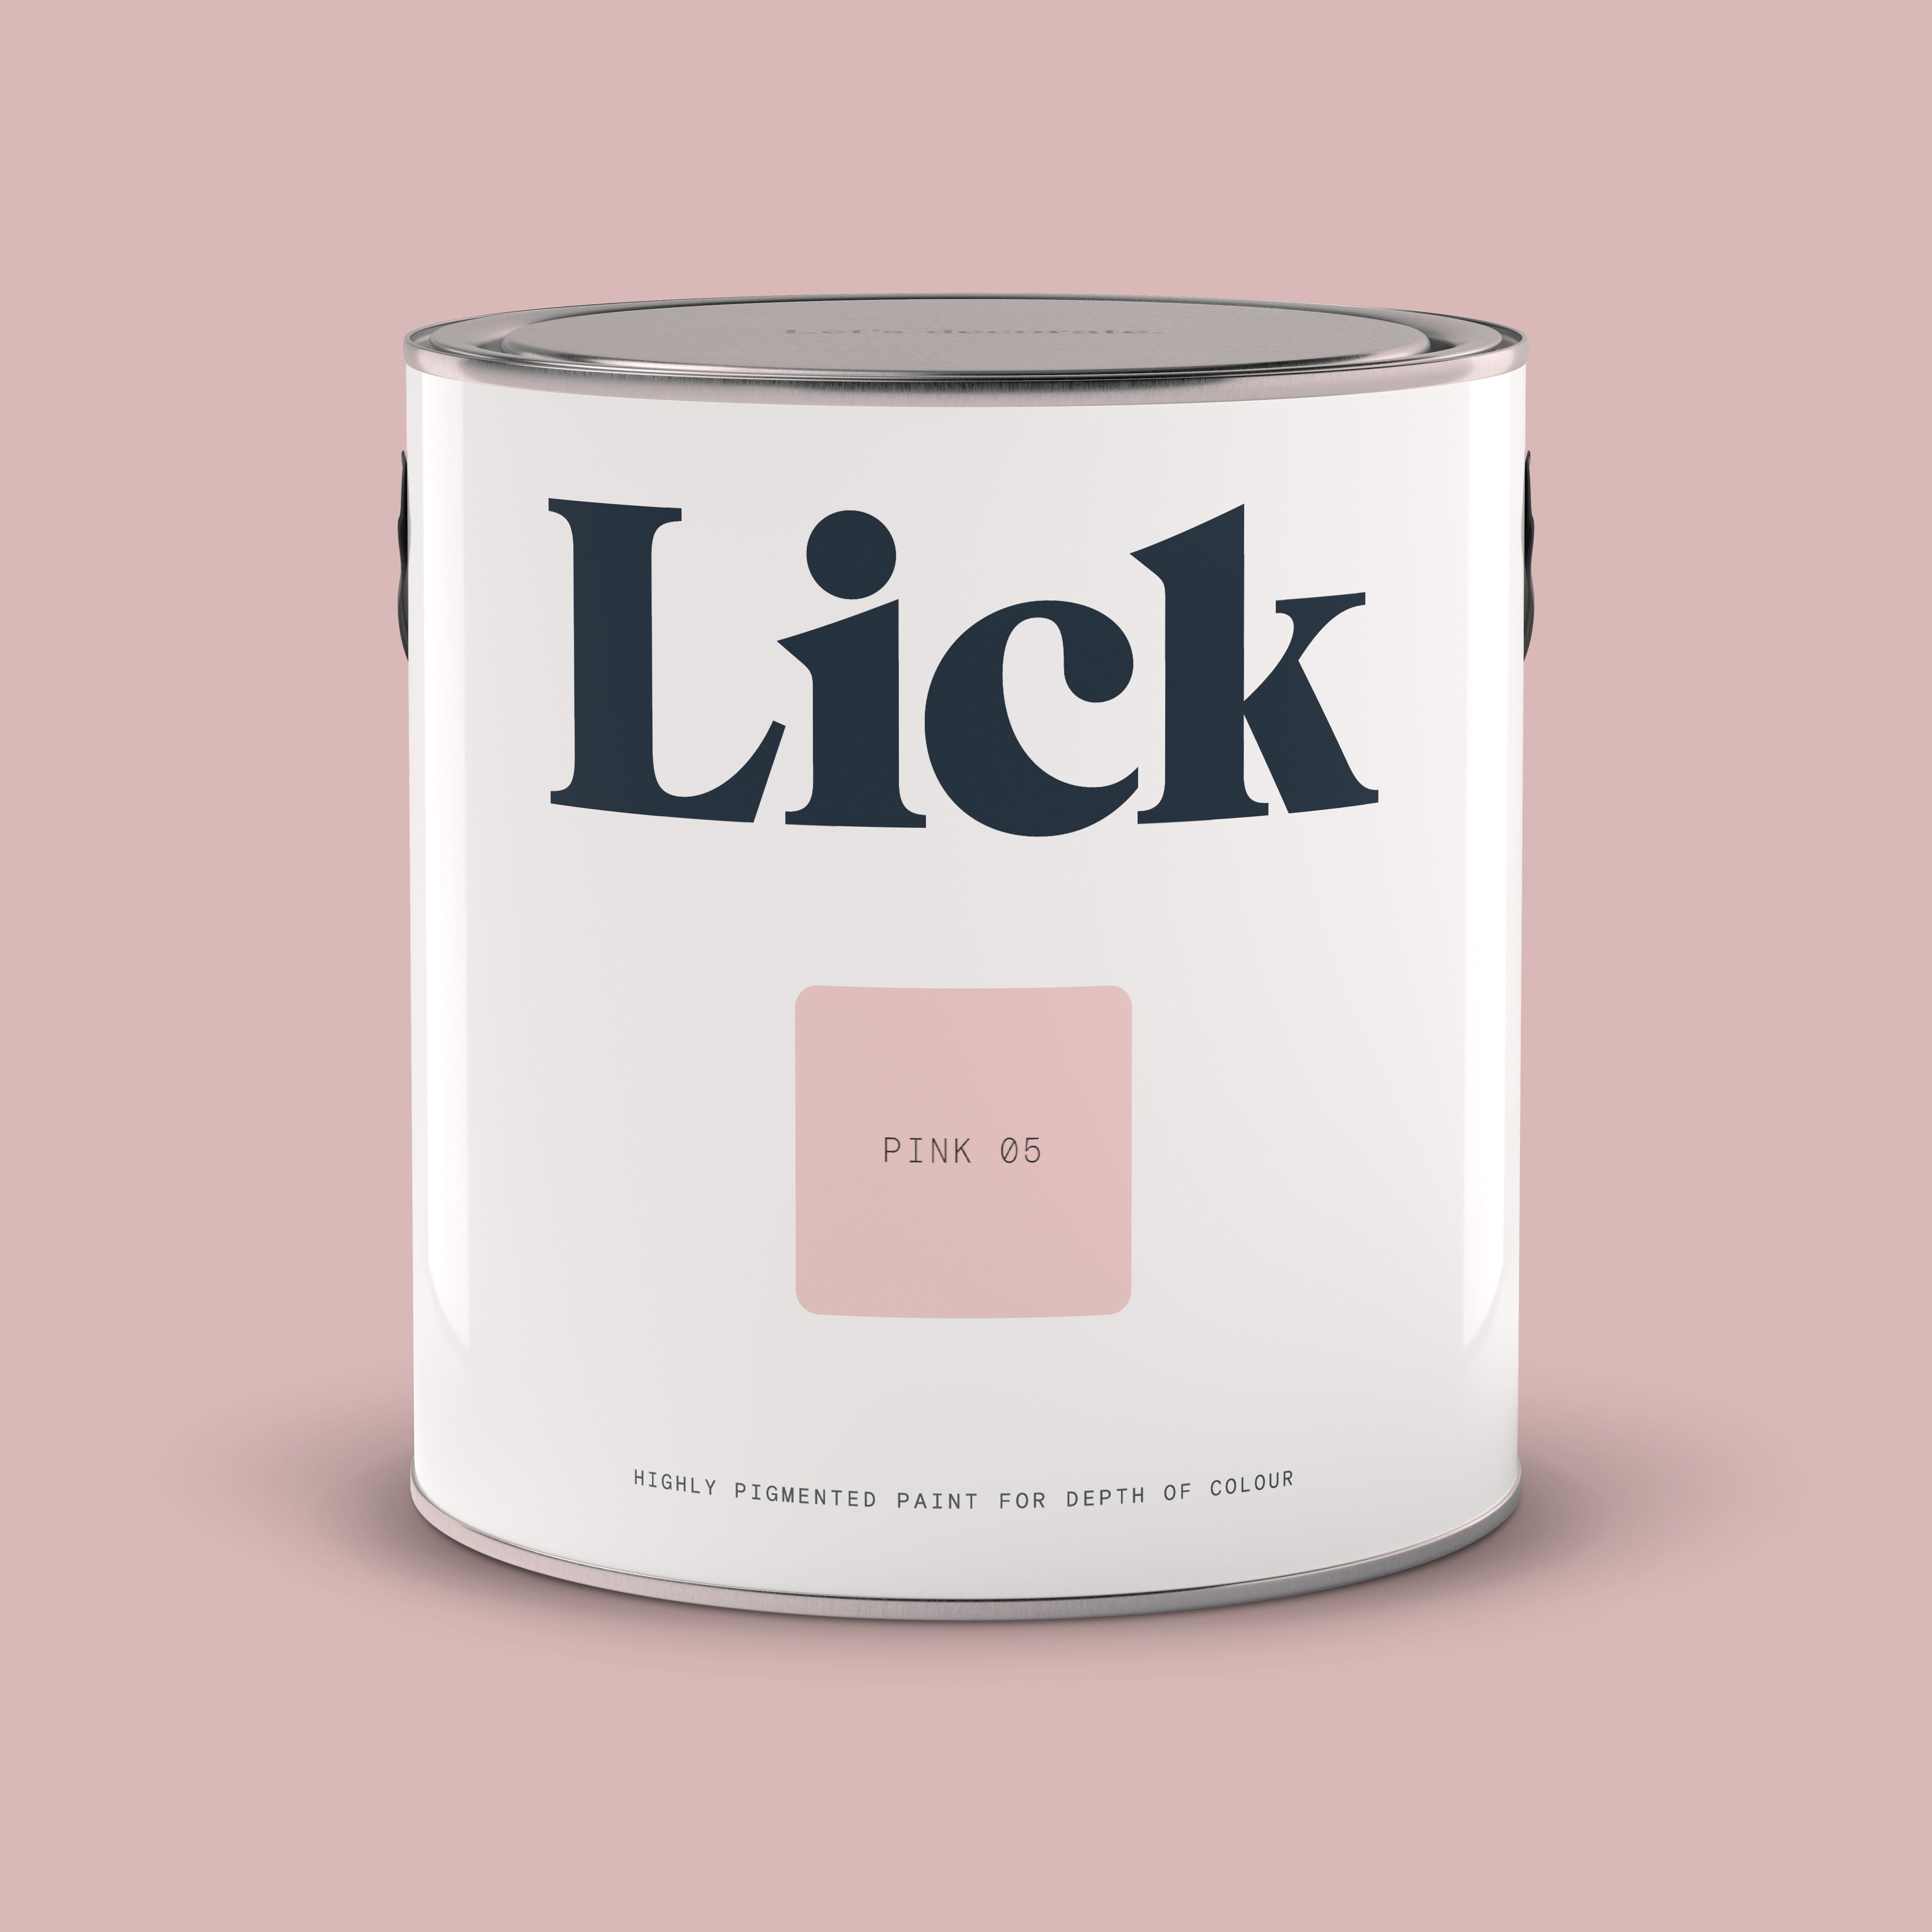 Lick Pink 05 Eggshell Emulsion paint, 2.5L